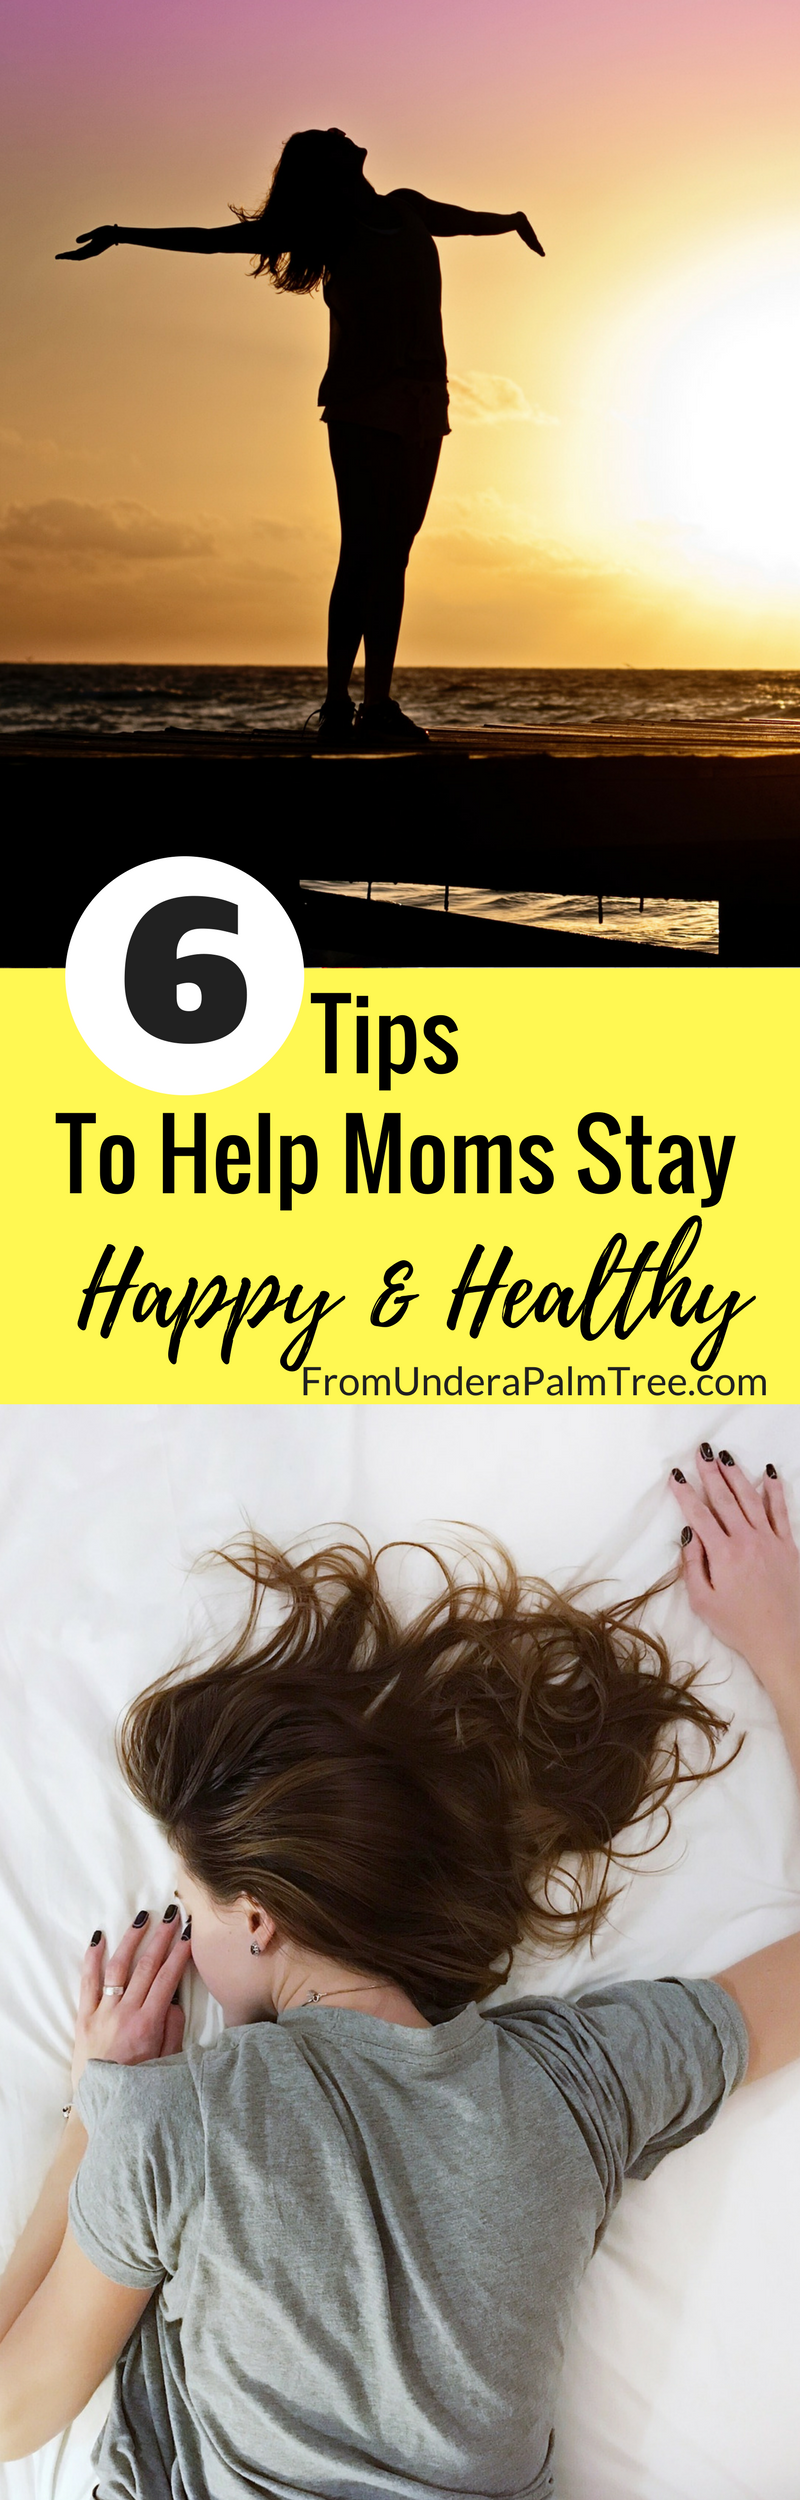 Life tips | Tips for moms | health & wellness for moms | moms | Wellness | healthy life style tips | relaxation tips | meditation |